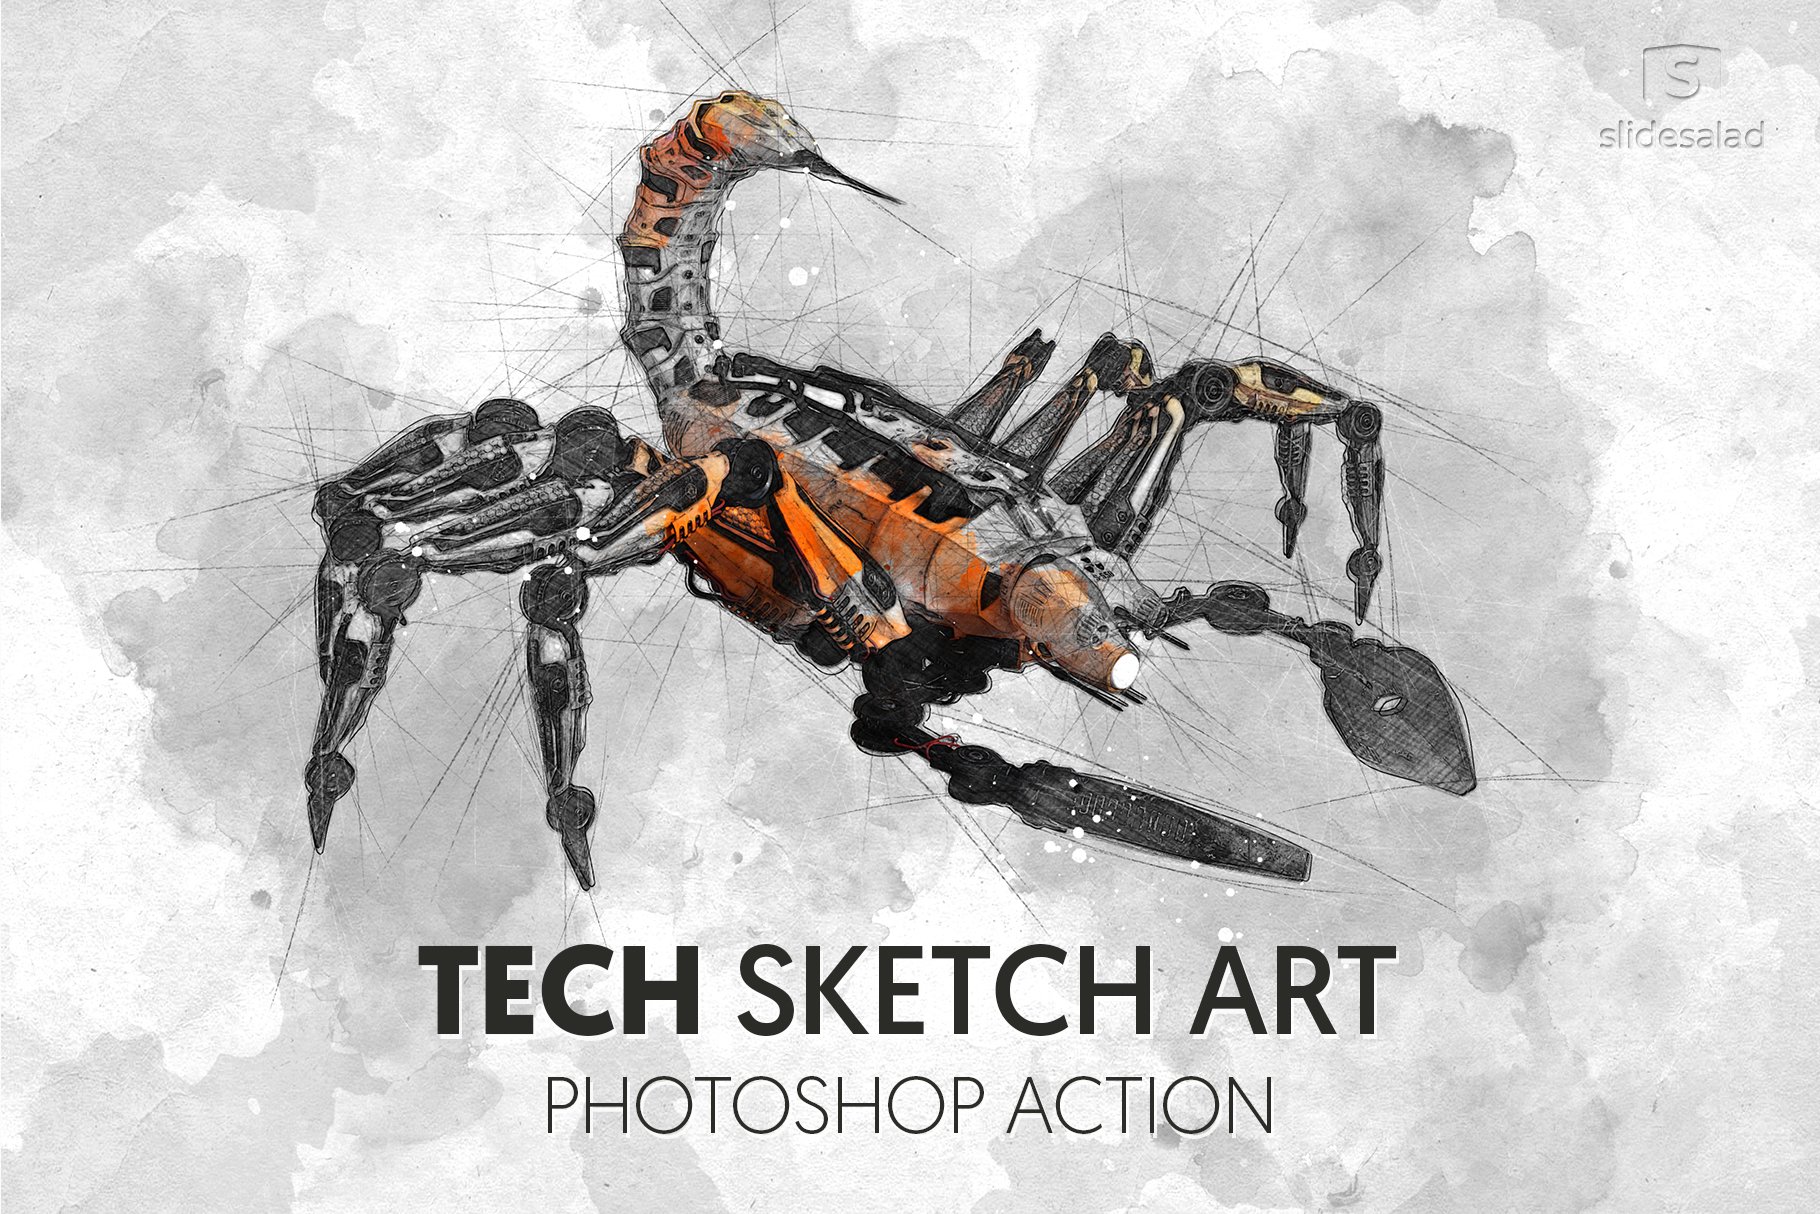 Tech Sketch Art Photoshop Actionpreview image.